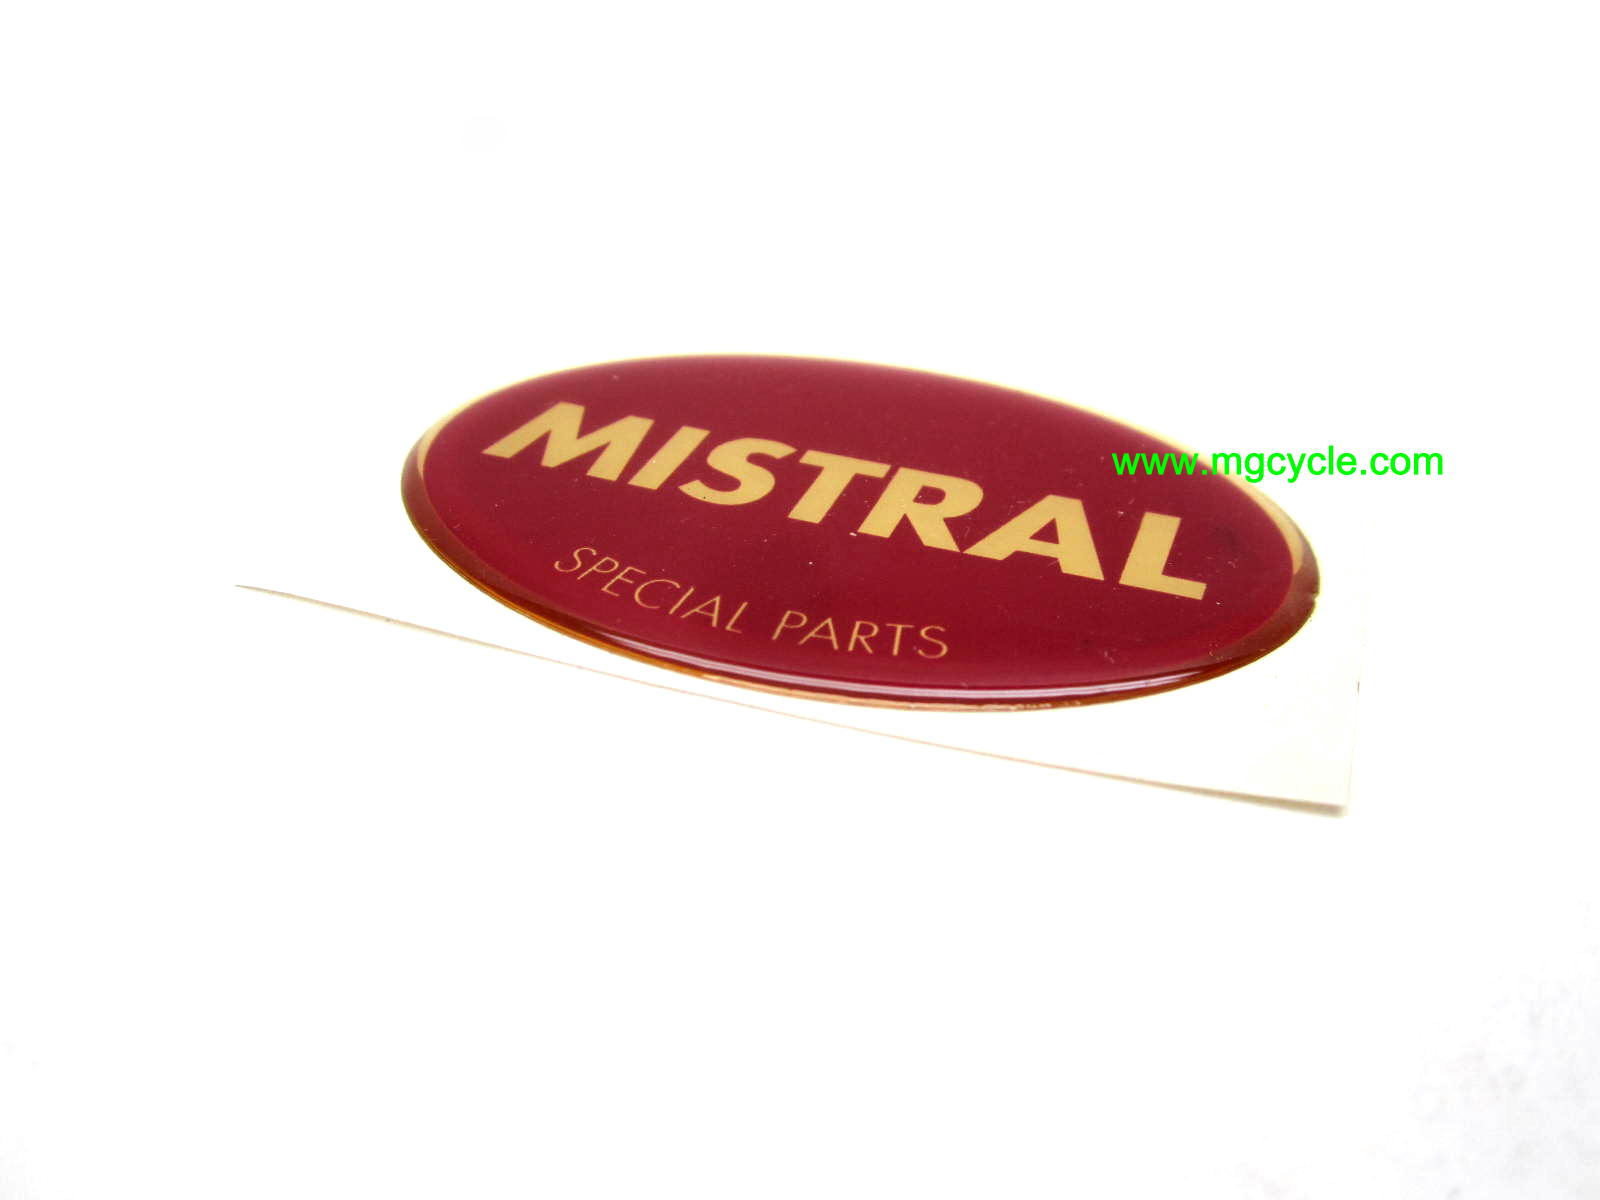 Mistral sticker, metallic vinyl 55mm x 35mm